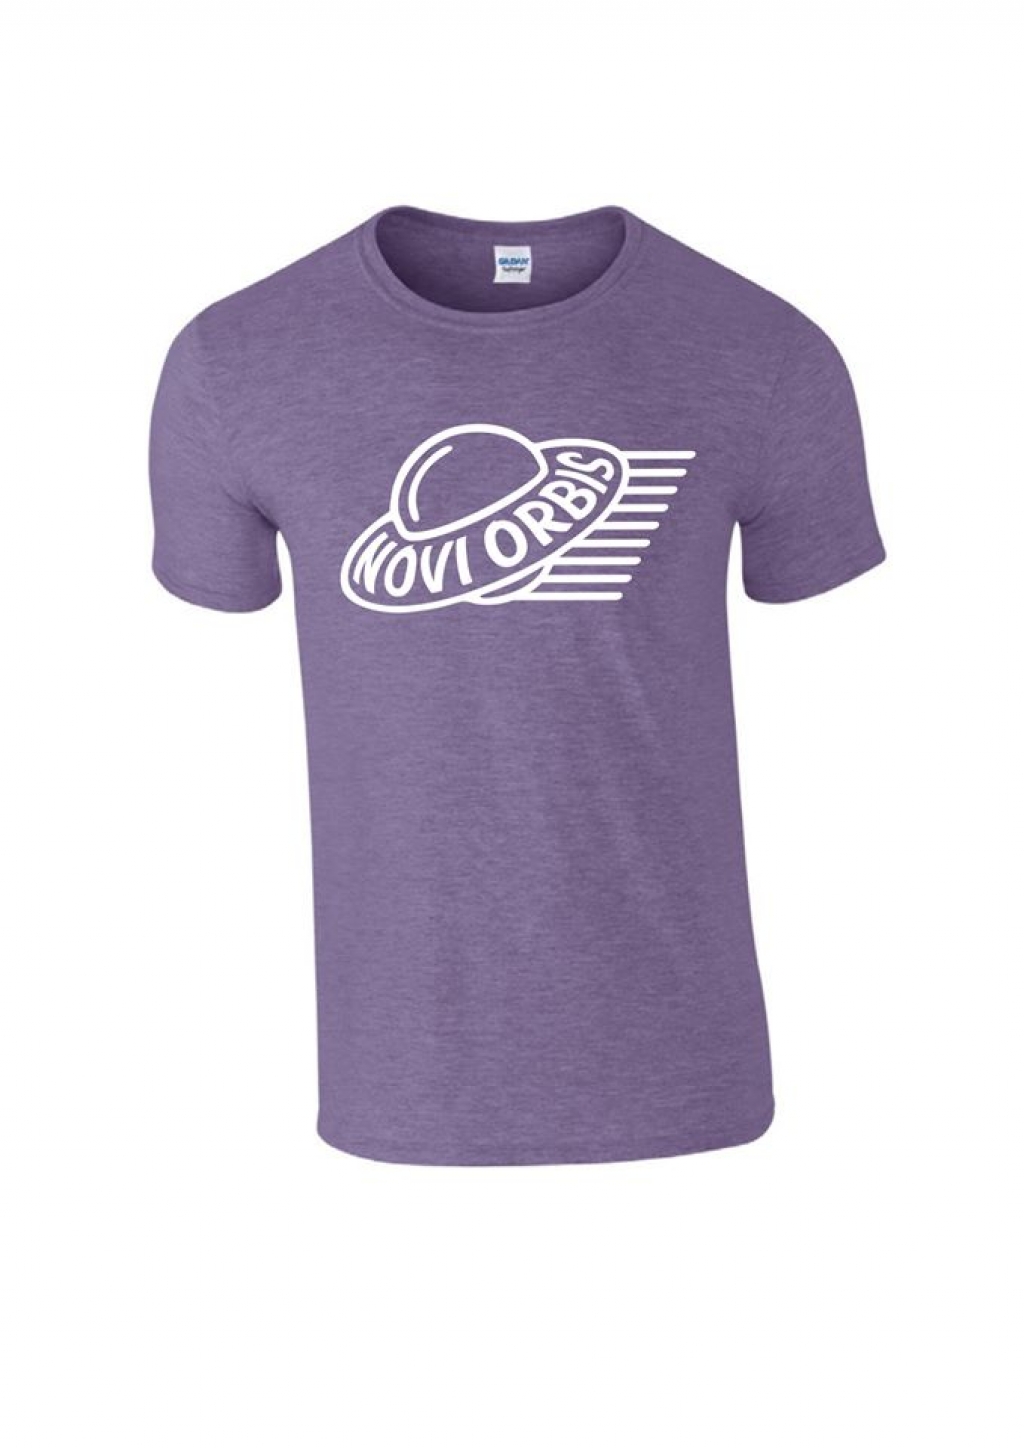 T-Shirt Novi Orbis - Size M /  GL64000 purple melange with white stamp